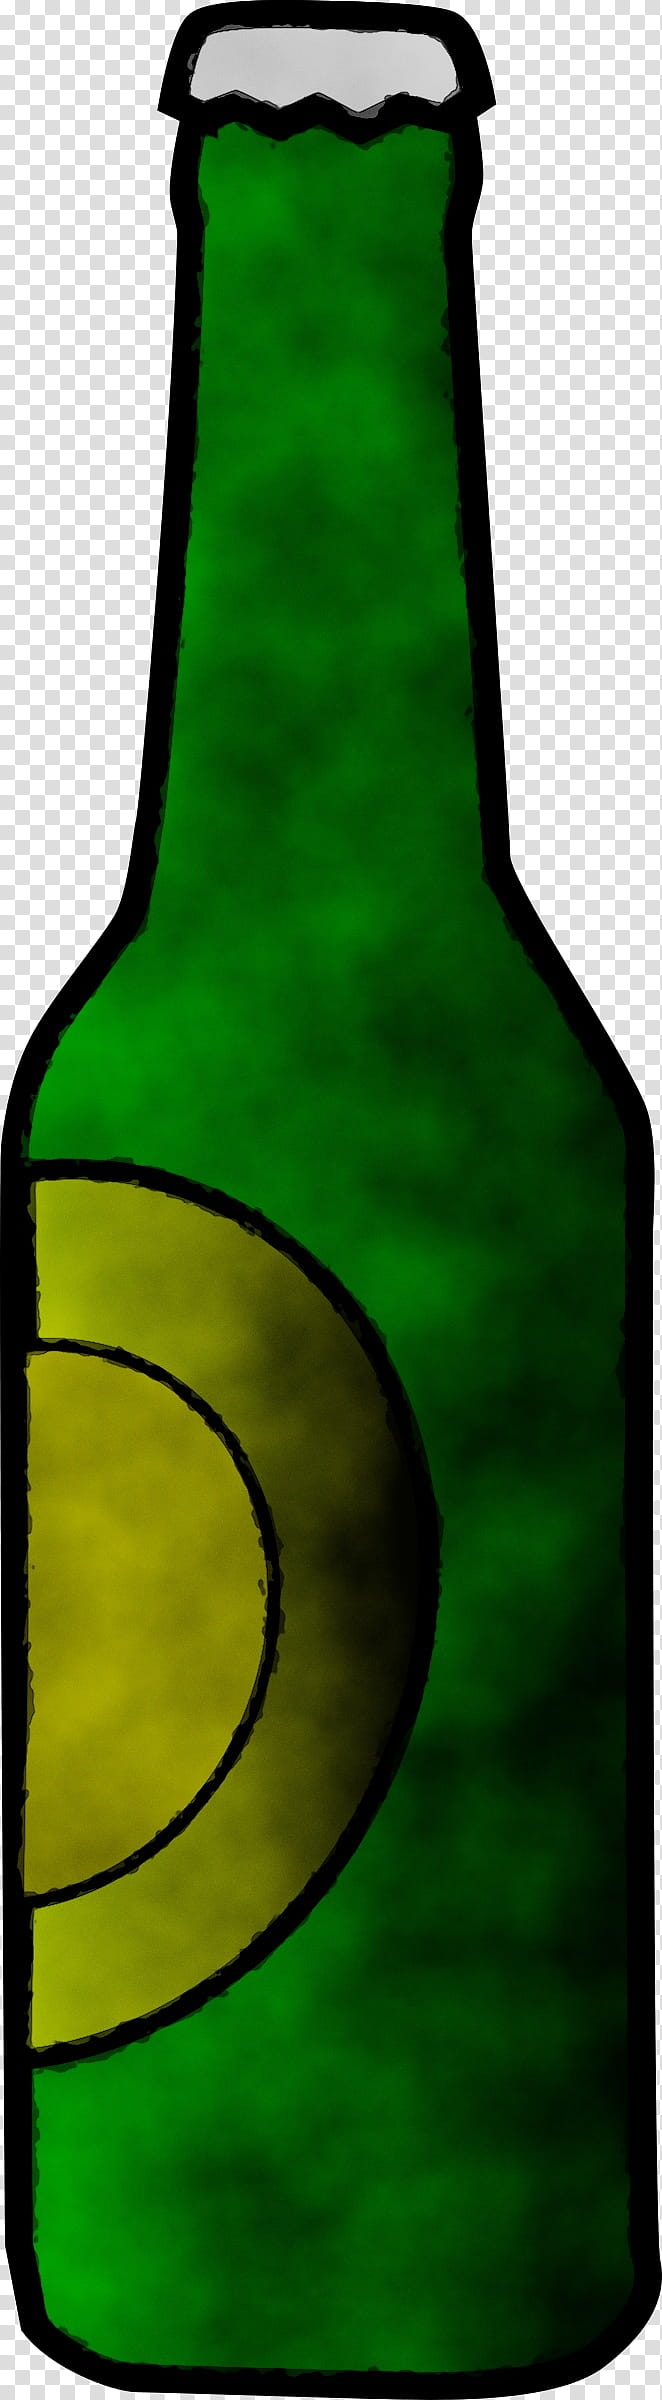 bottle green beer bottle wine bottle glass bottle, Watercolor, Paint, Wet Ink, Drinkware, Home Accessories transparent background PNG clipart